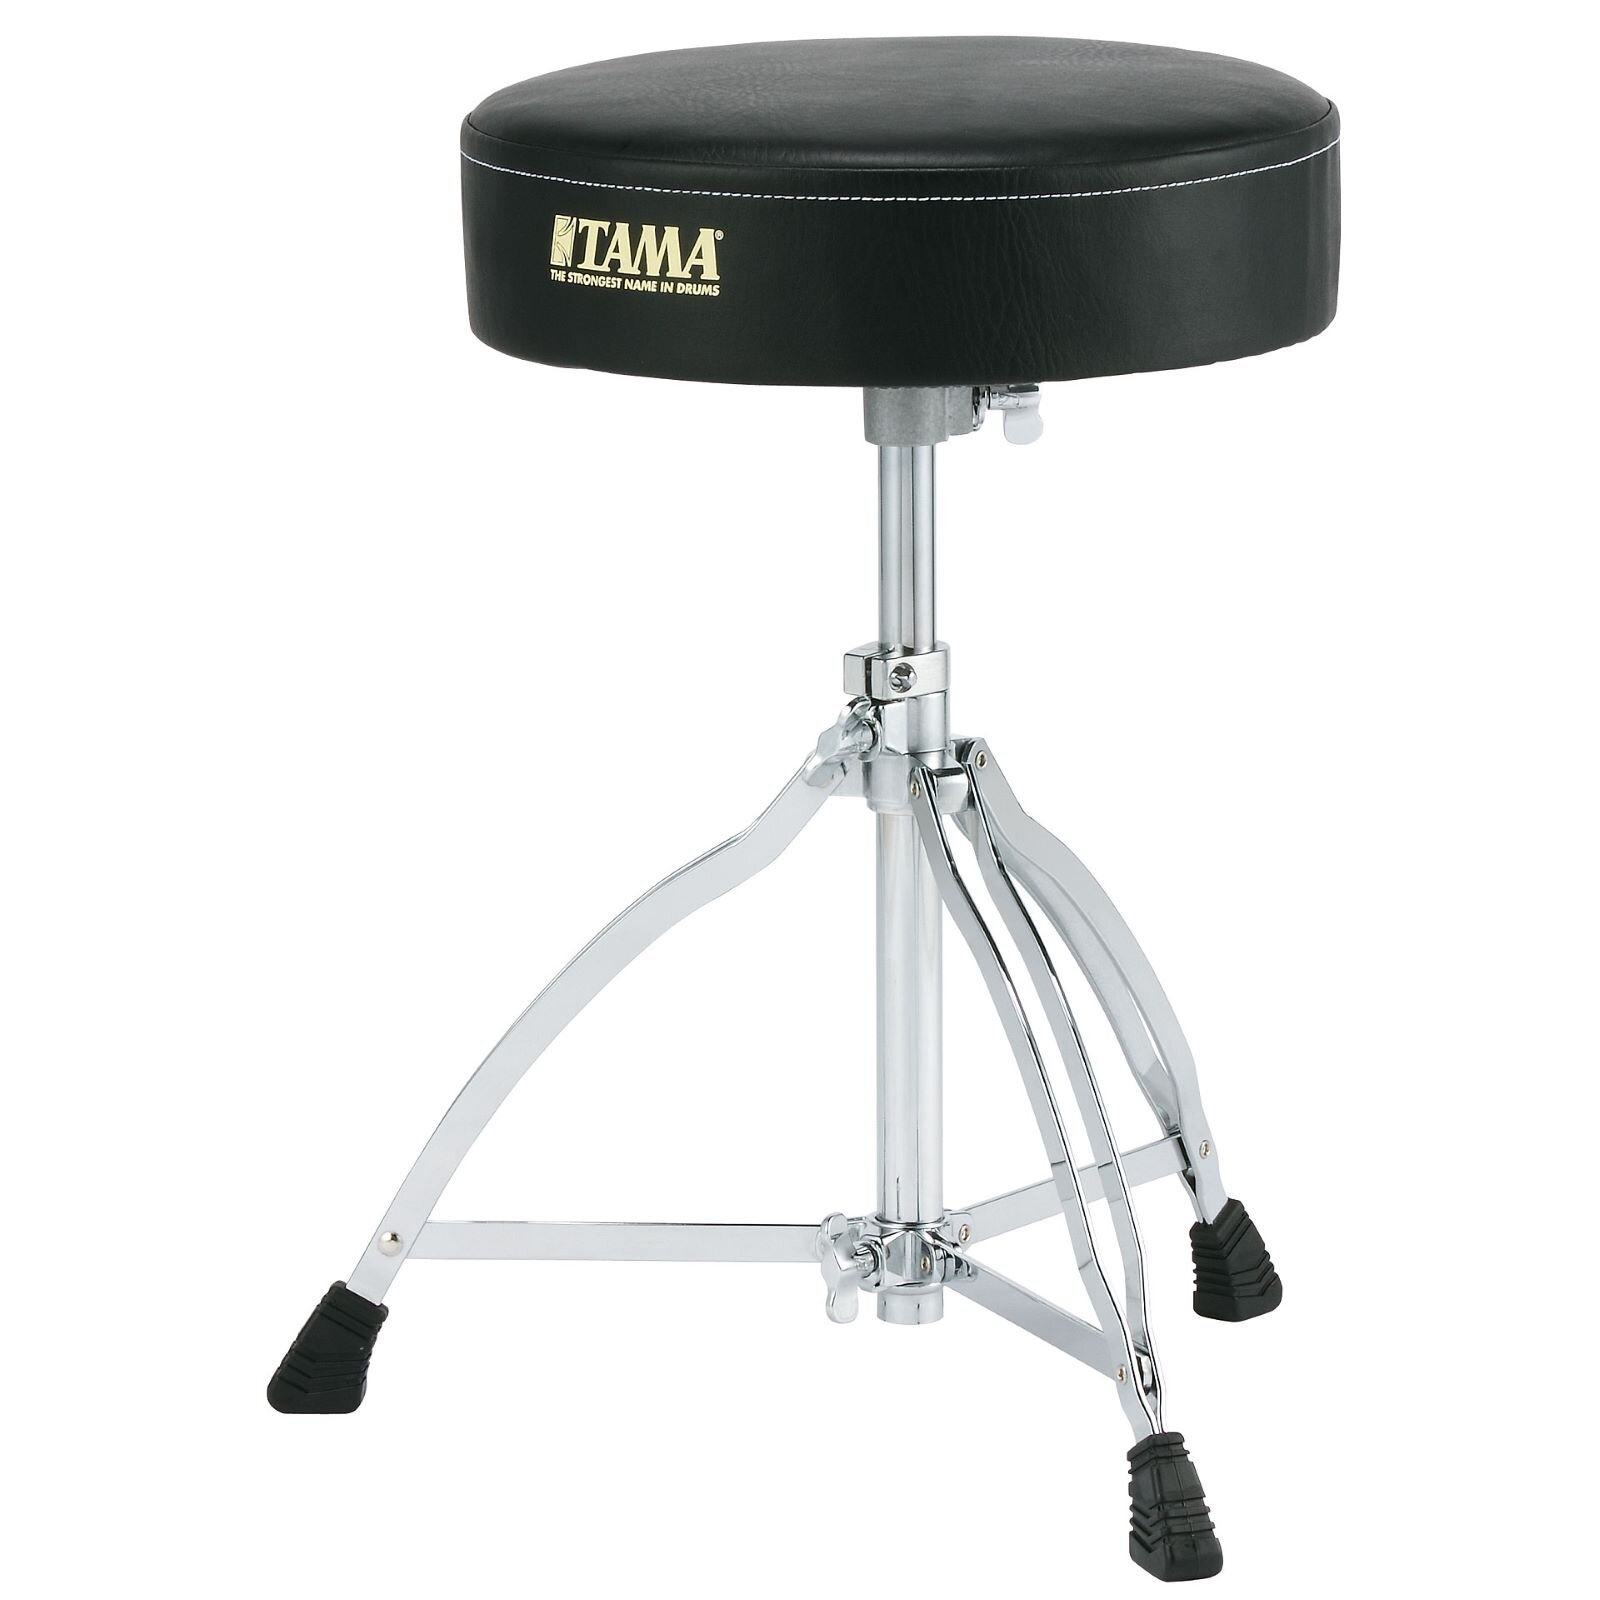 Tama Limited Edition Drum Throne Black (HT130) : photo 1